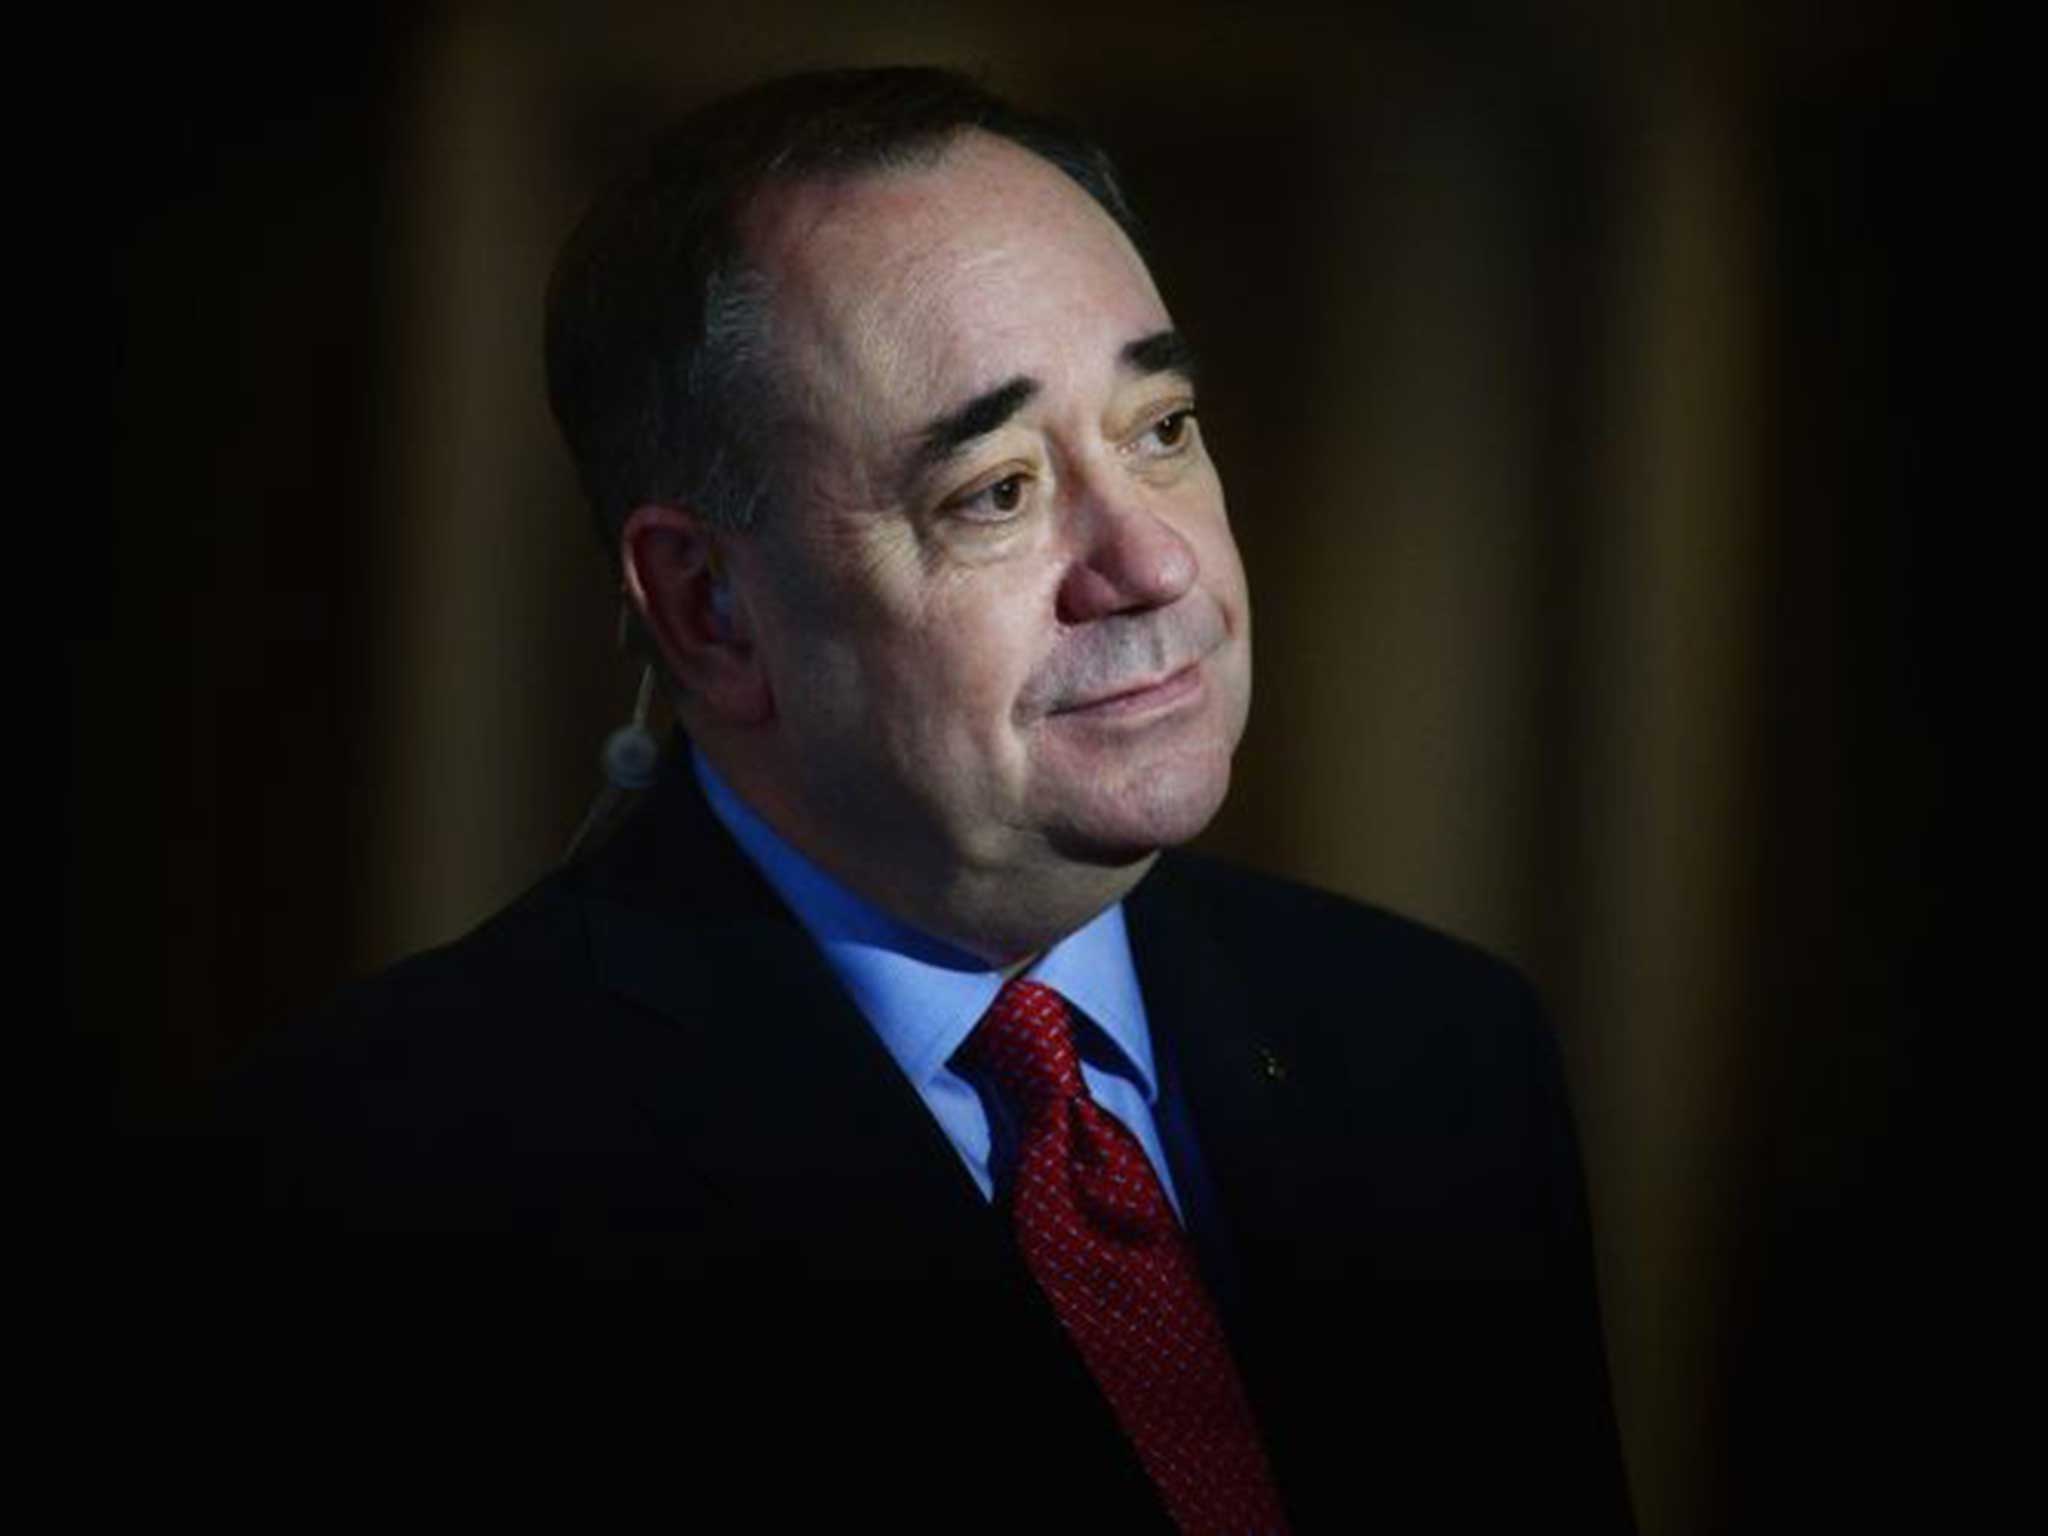 Scotland's former First Minister Alex Salmond